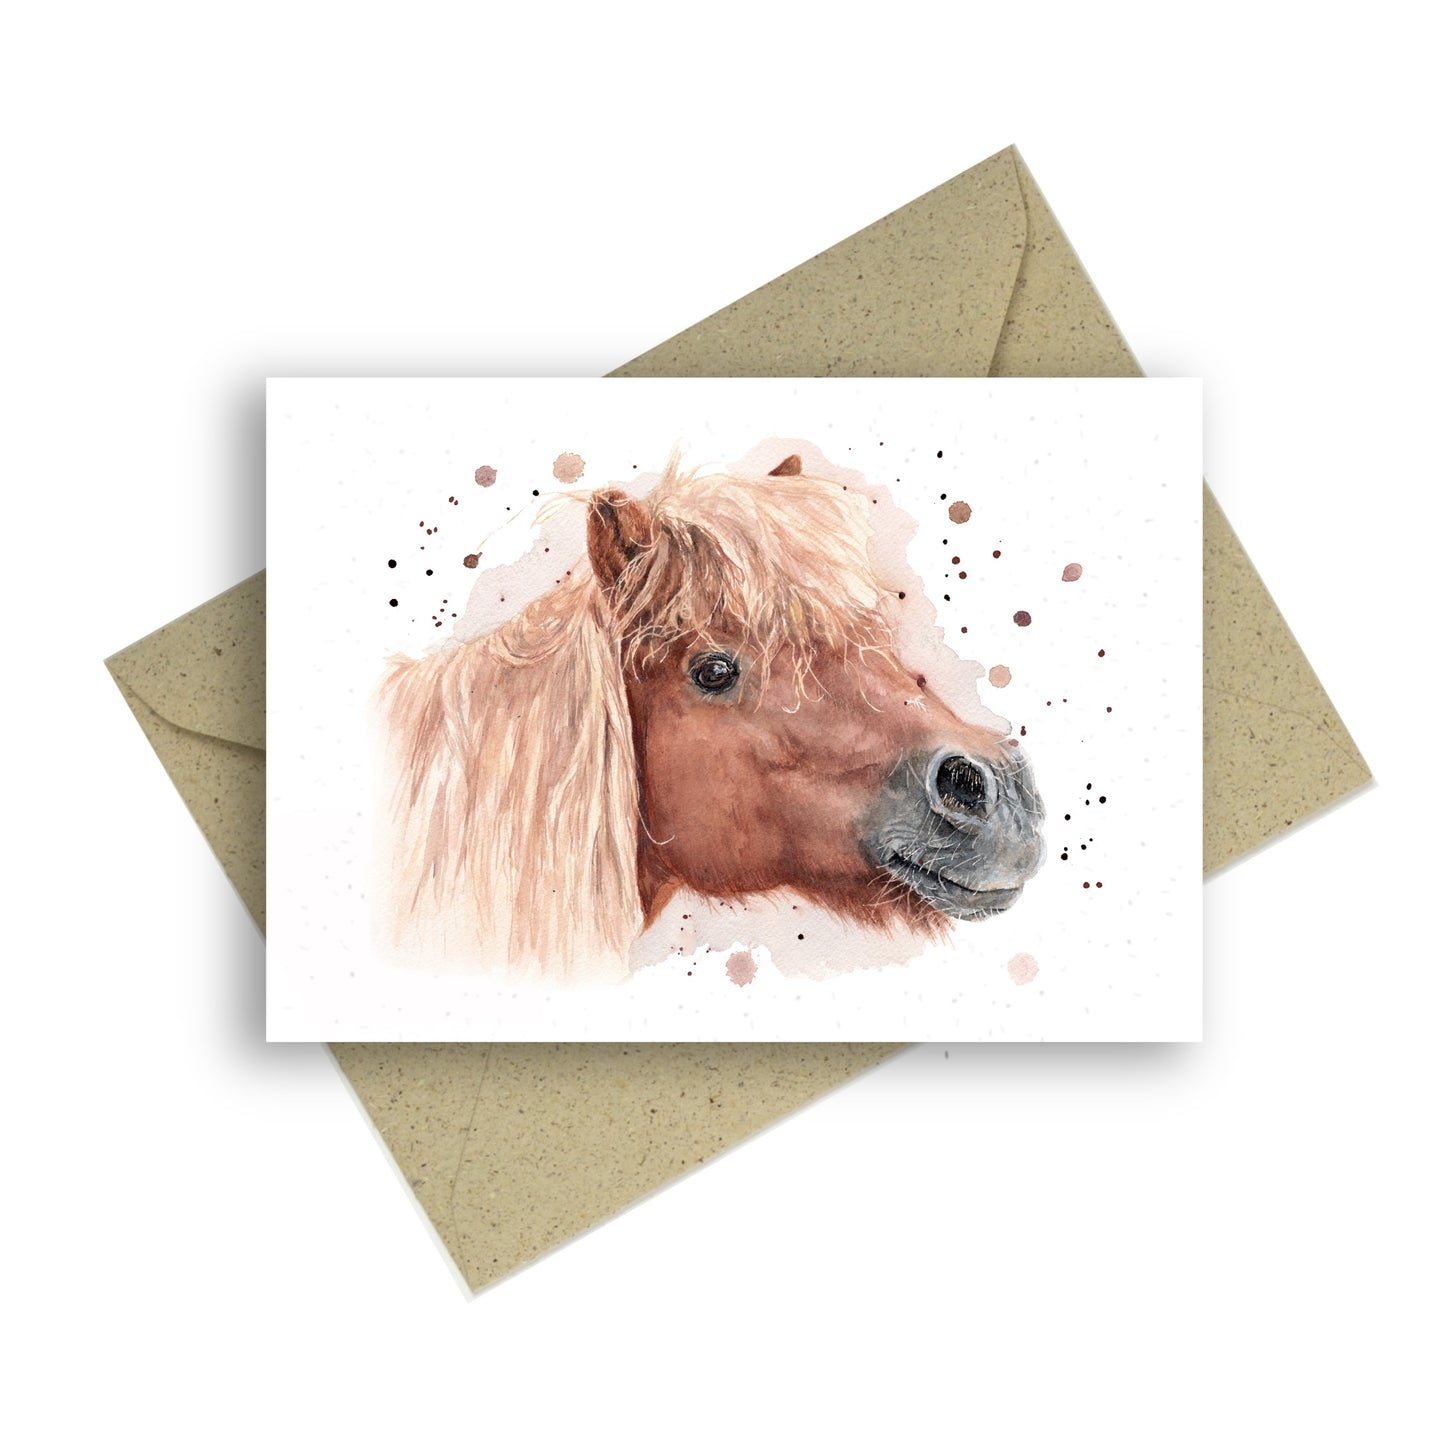 Greeting card “Pony”